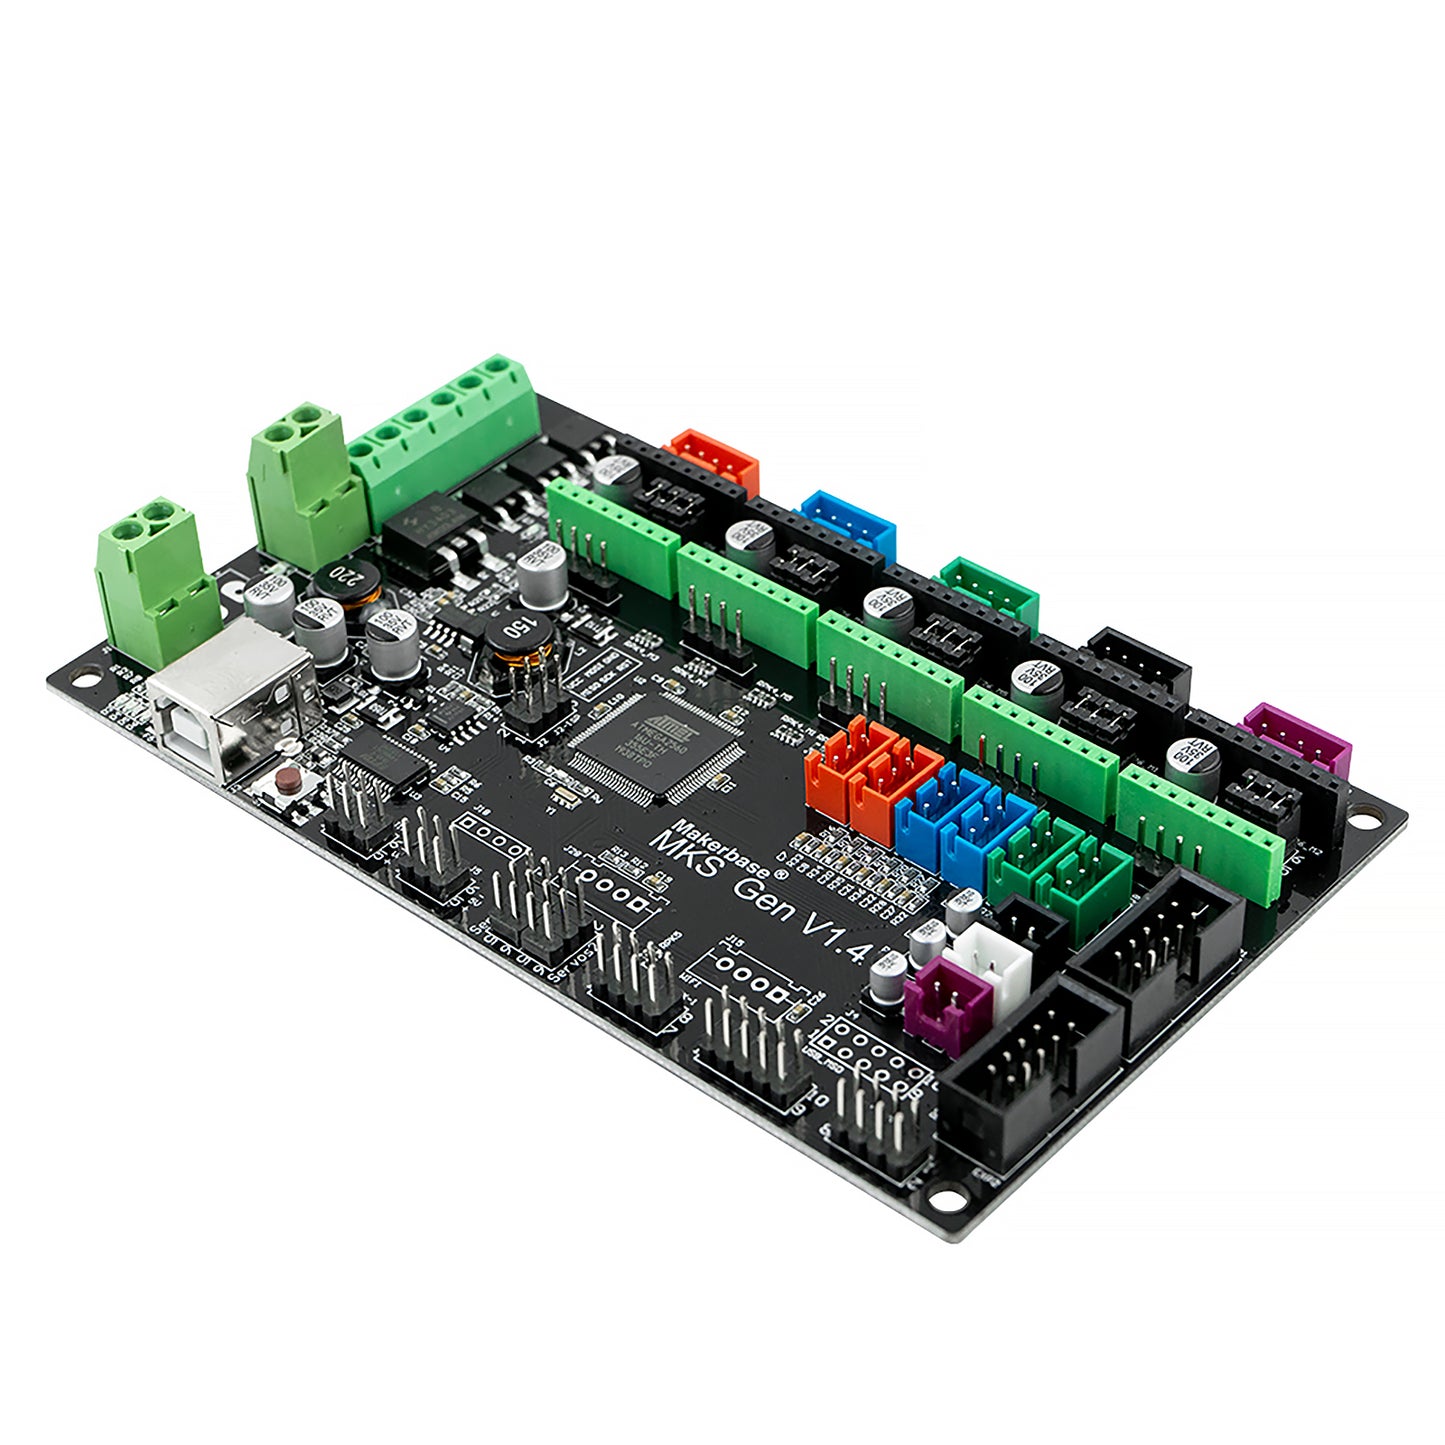 3D printer motherboard 2560 control board For tevo Black Widow 3D printers